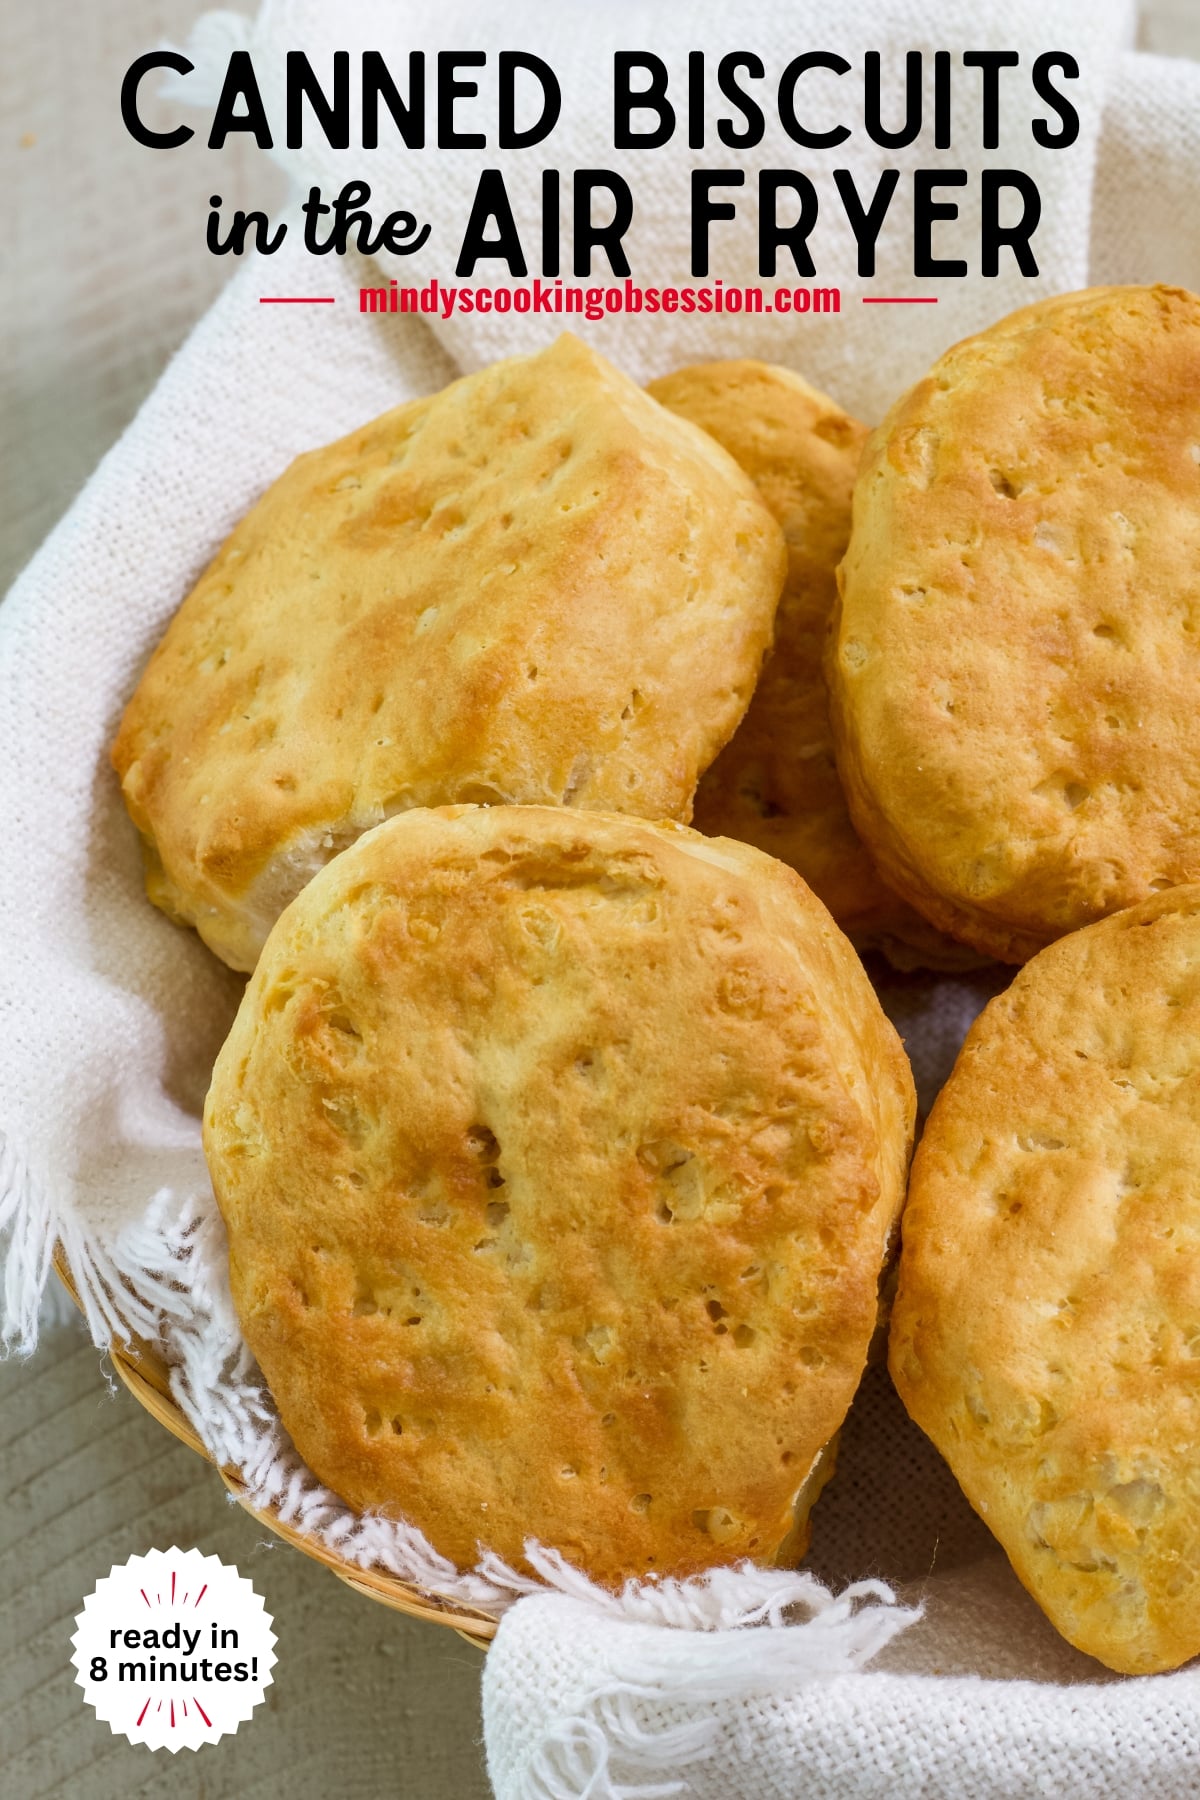 How to Make Biscuits: Ninja Foodi (Air Fryer) - Recipes That Crock!